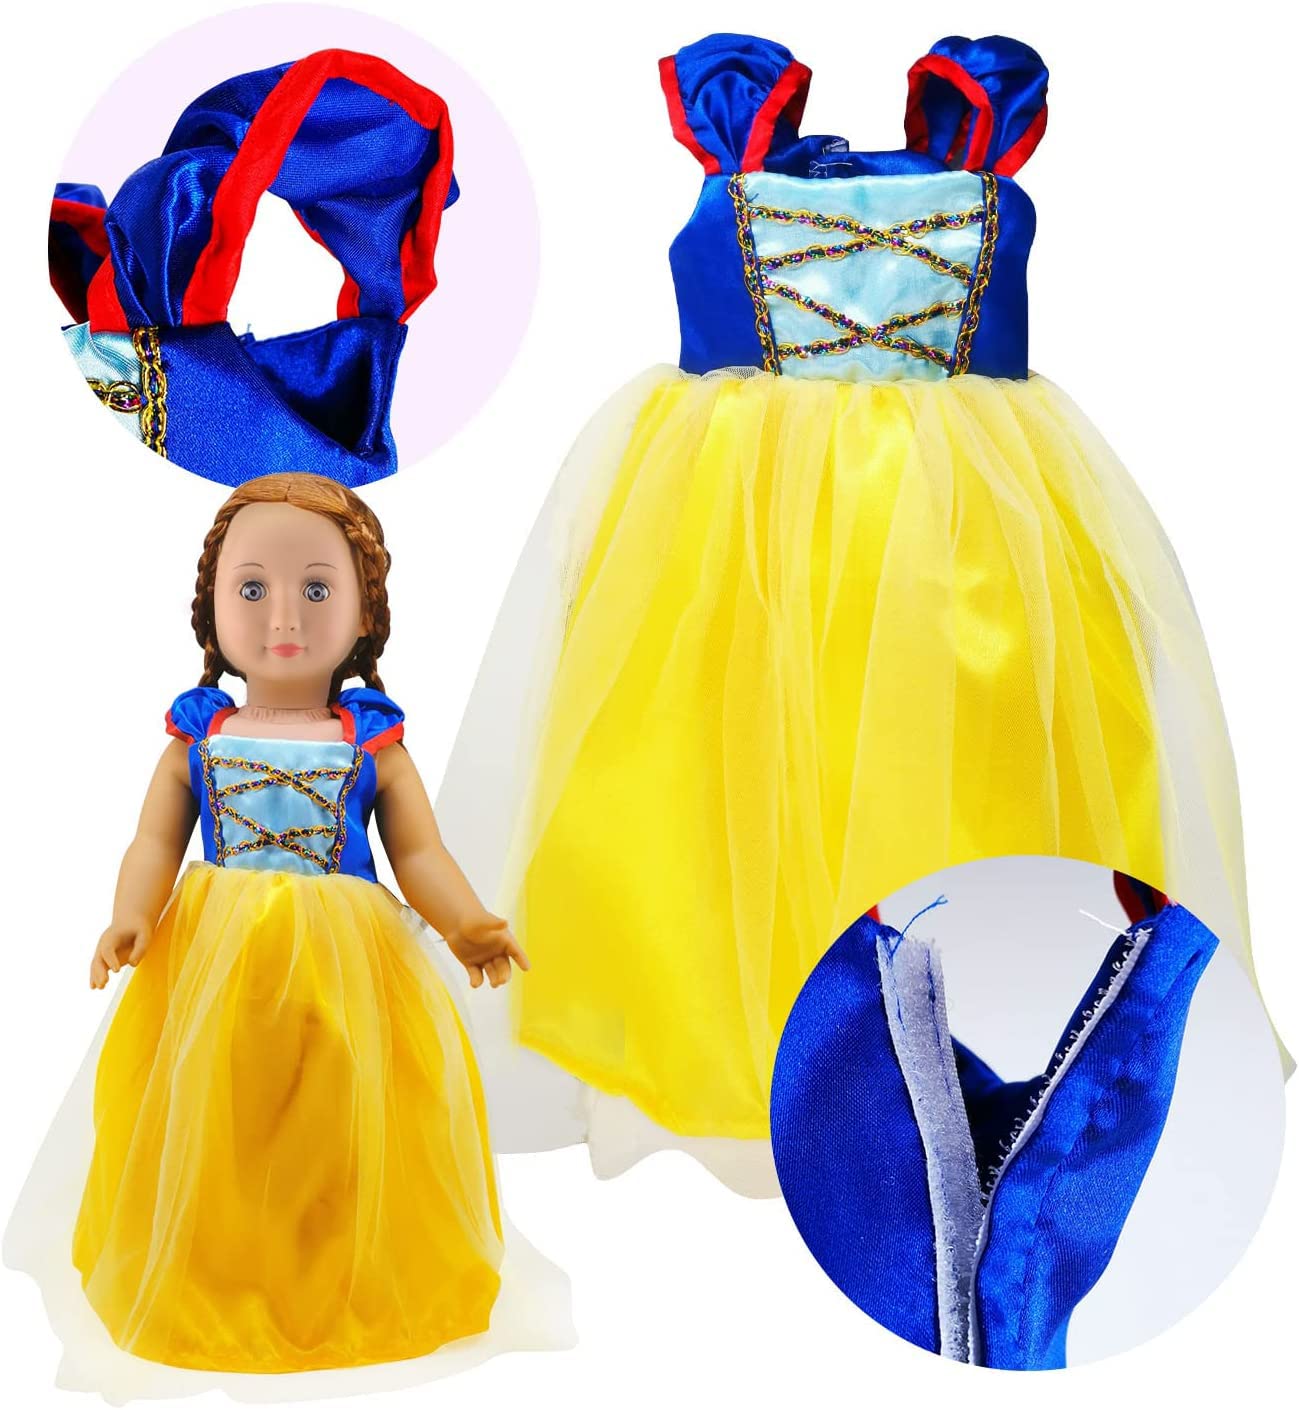 18 inch Doll Clothes ,6Pcs Princess Costume Include Bella,Cinderella,Snow White,Rapunzel,Princess Elsa and Aurora Fits All 18 inch Girl Dolls